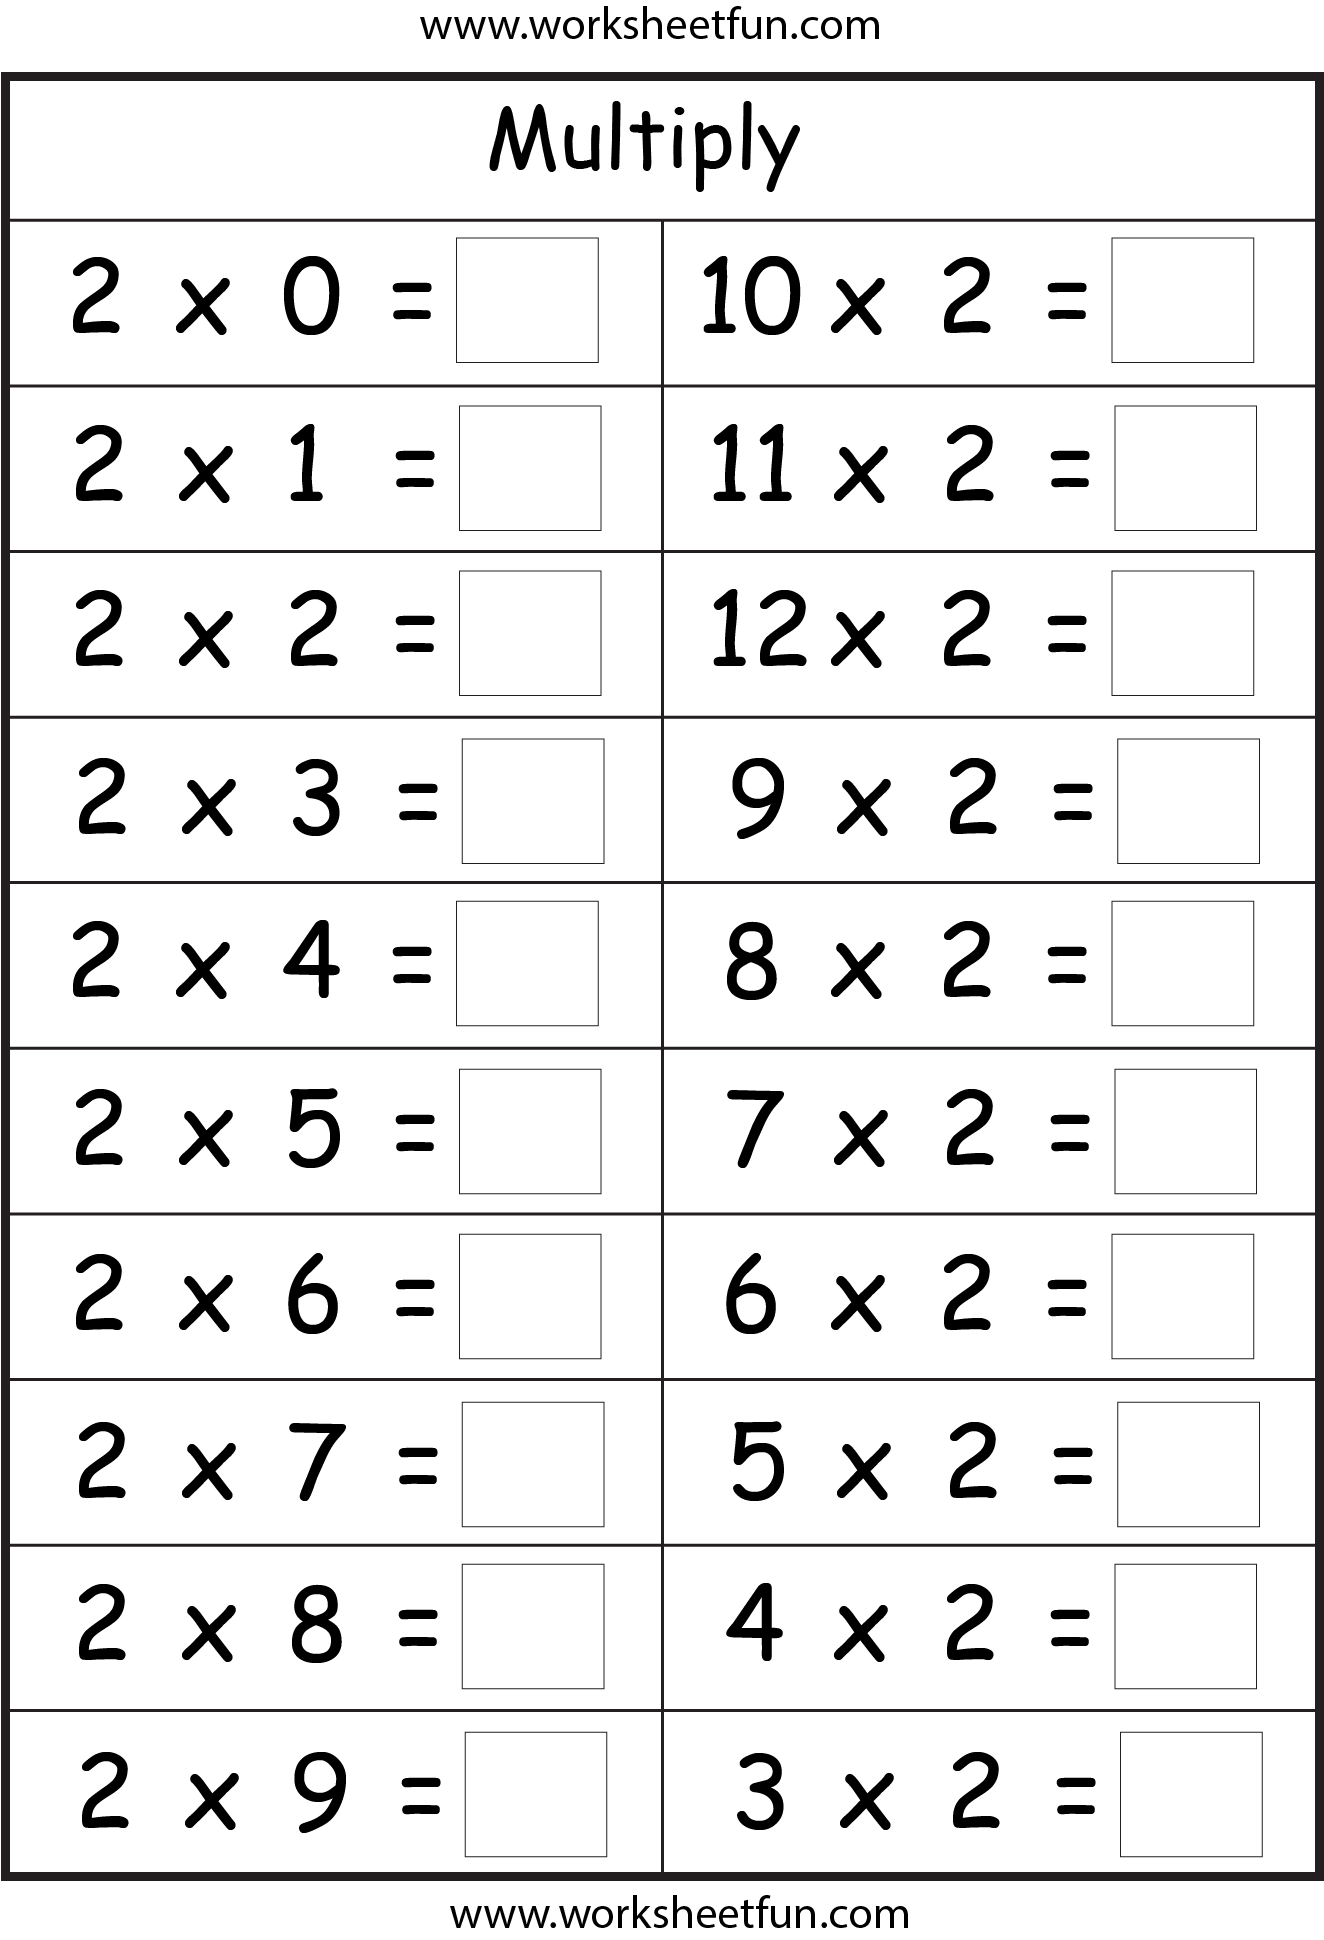 4 X 2 Multiplication Worksheets